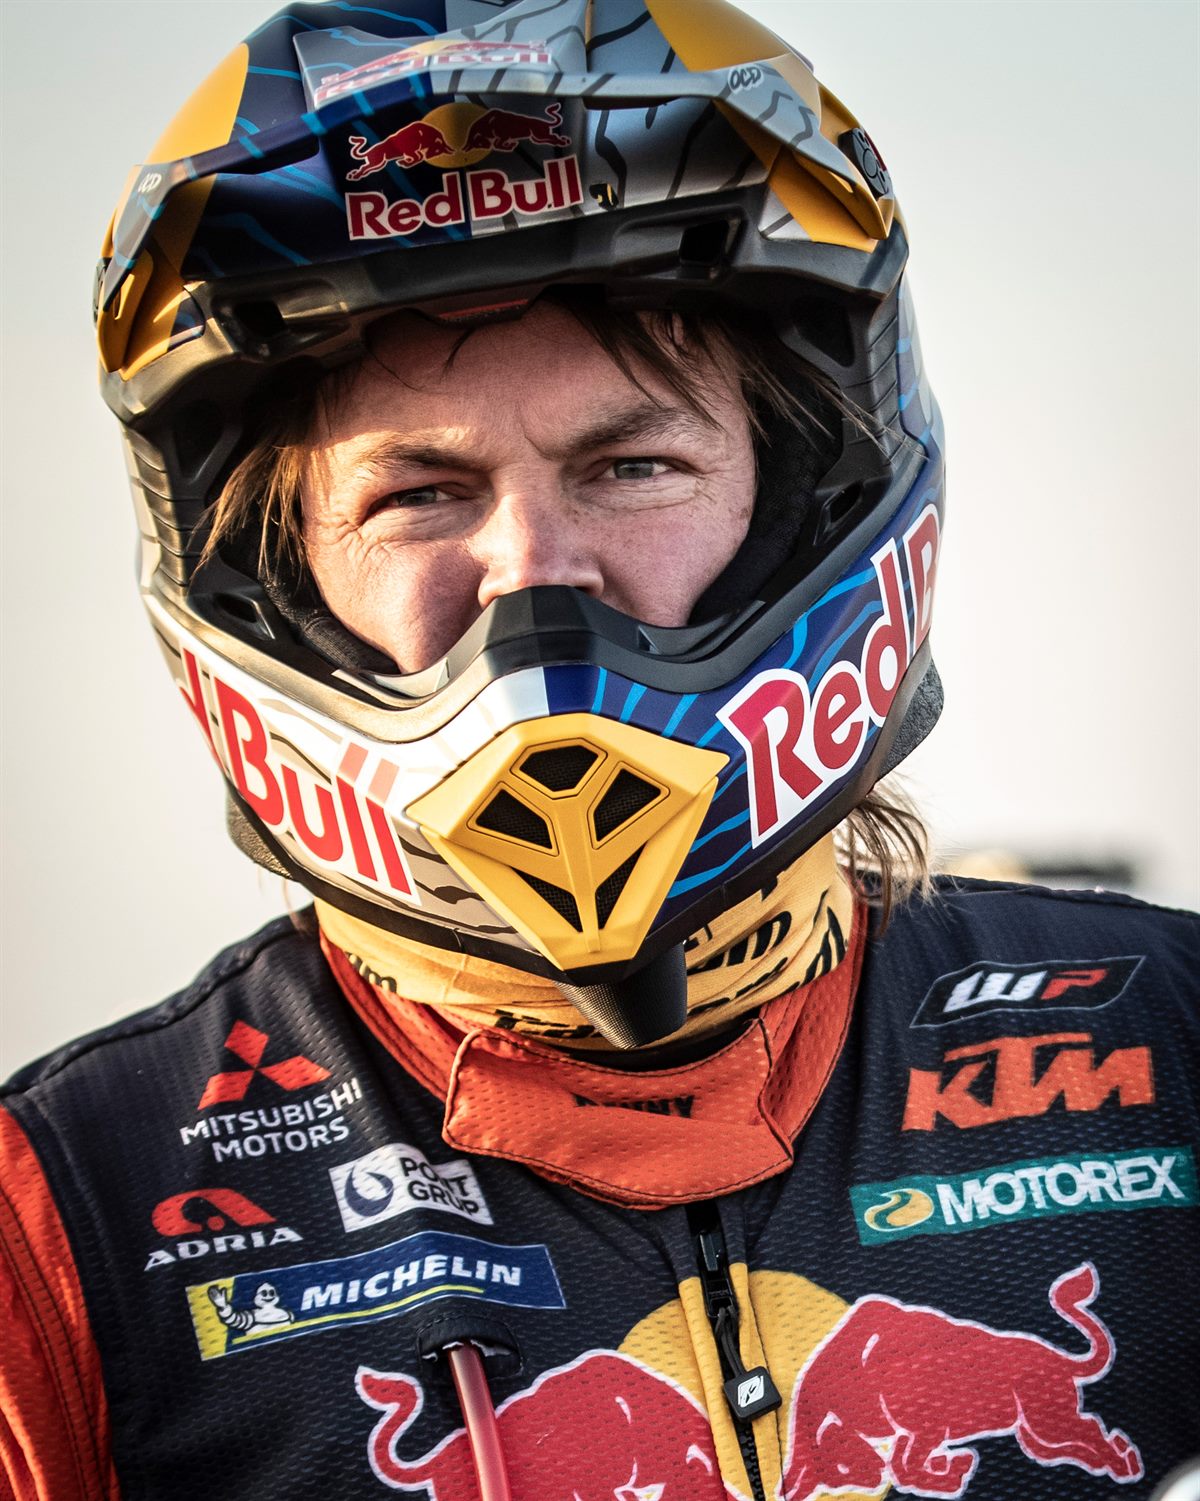 Toby Price - Red Bull KTM Factory Racing - 2021 Dakar Rally 